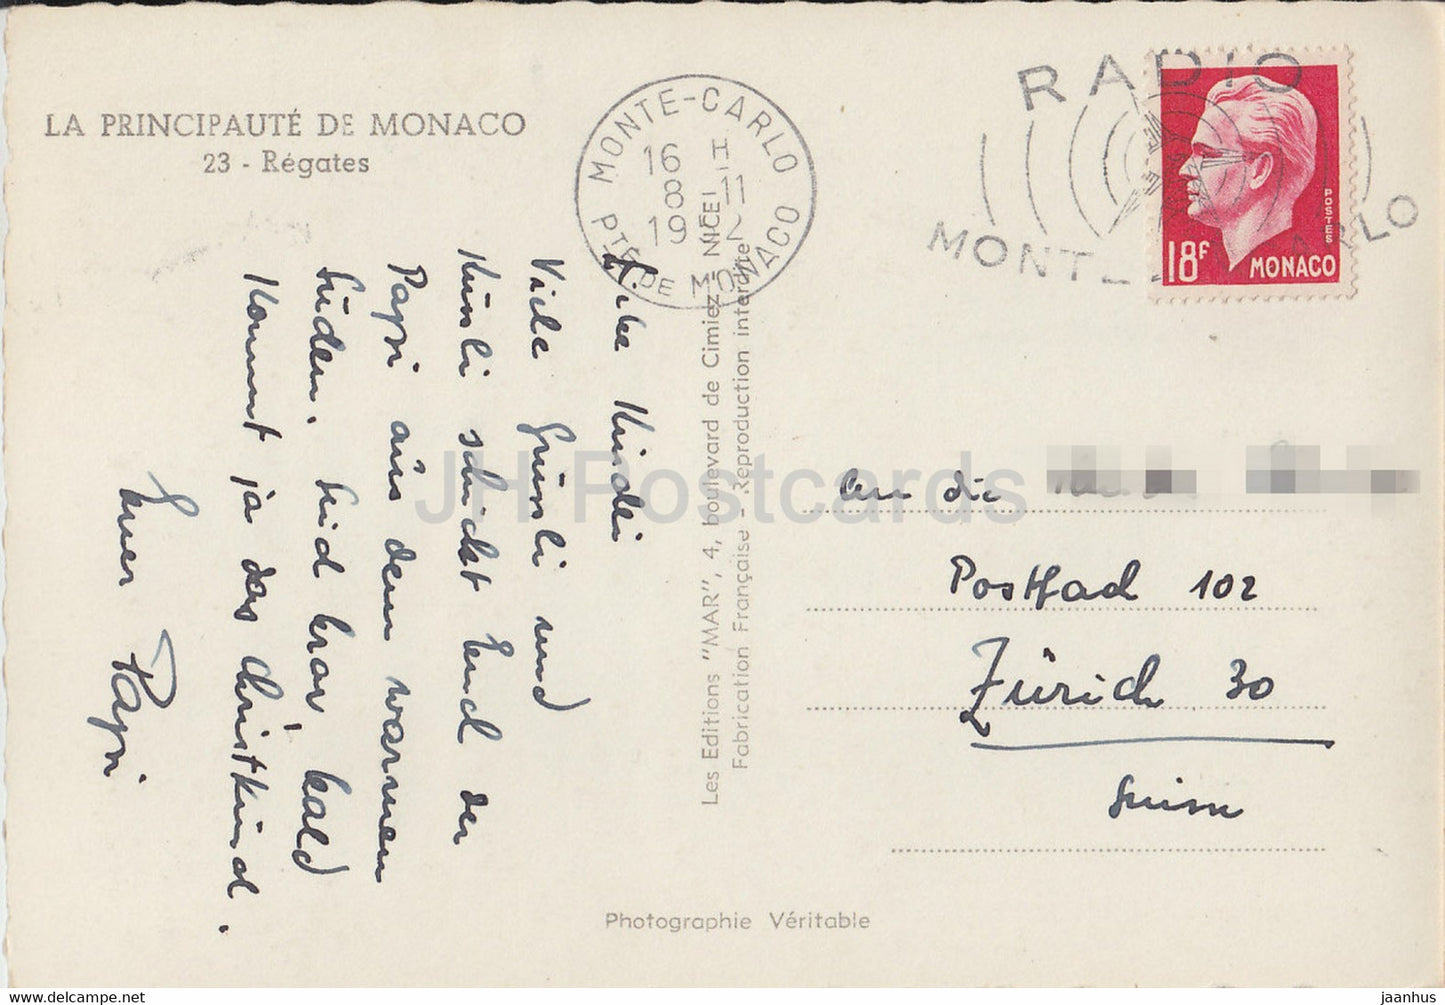 Regates - Regatta - sailing boat - old postcard - 1952 - Monaco - used